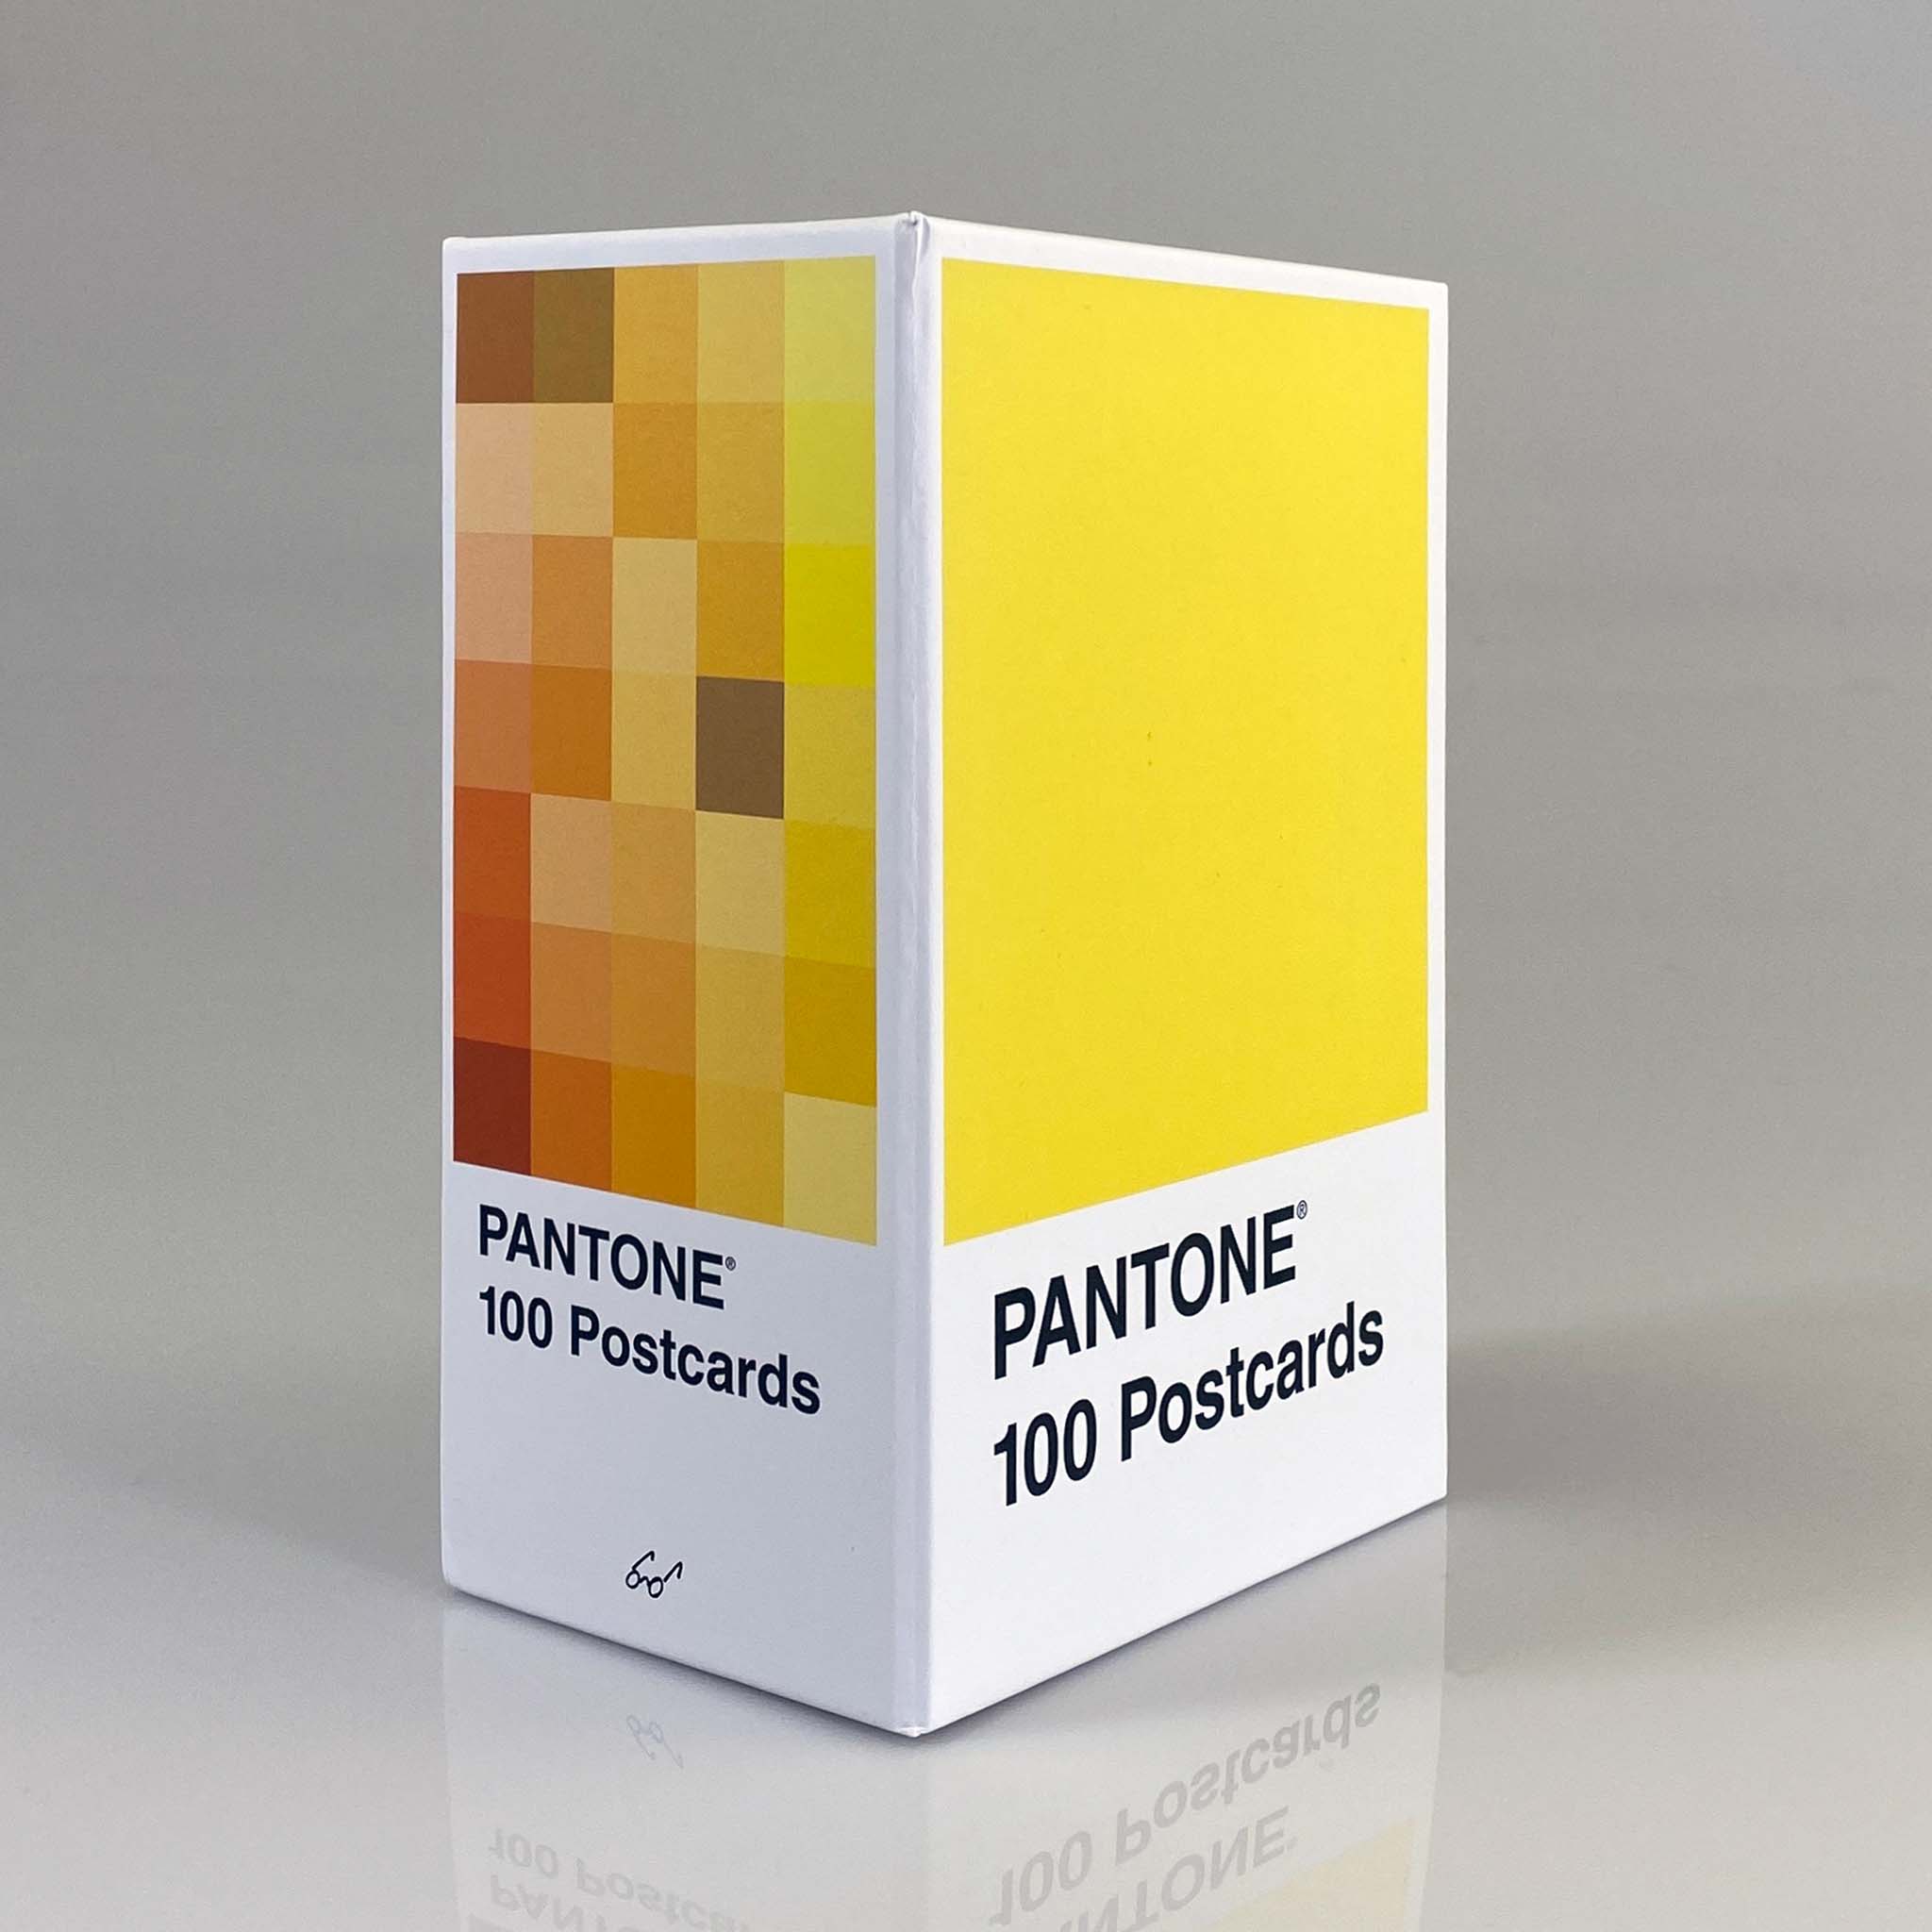 Pantone Postcard Box: 100 Postcards